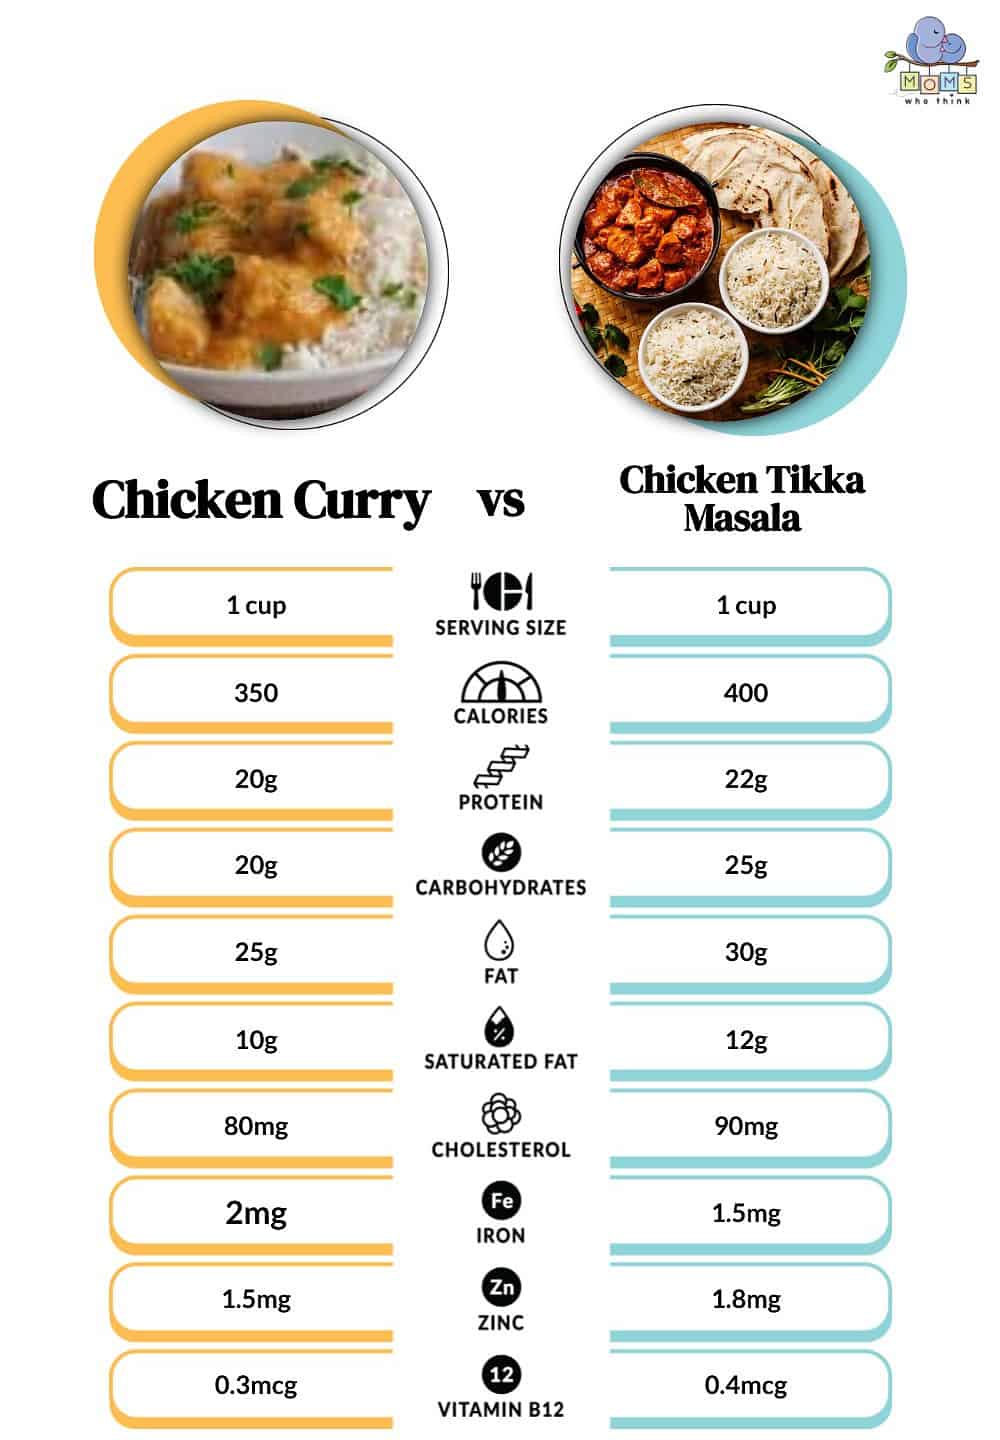 Chicken Curry vs Chicken Tikka Masala Nutritional Facts